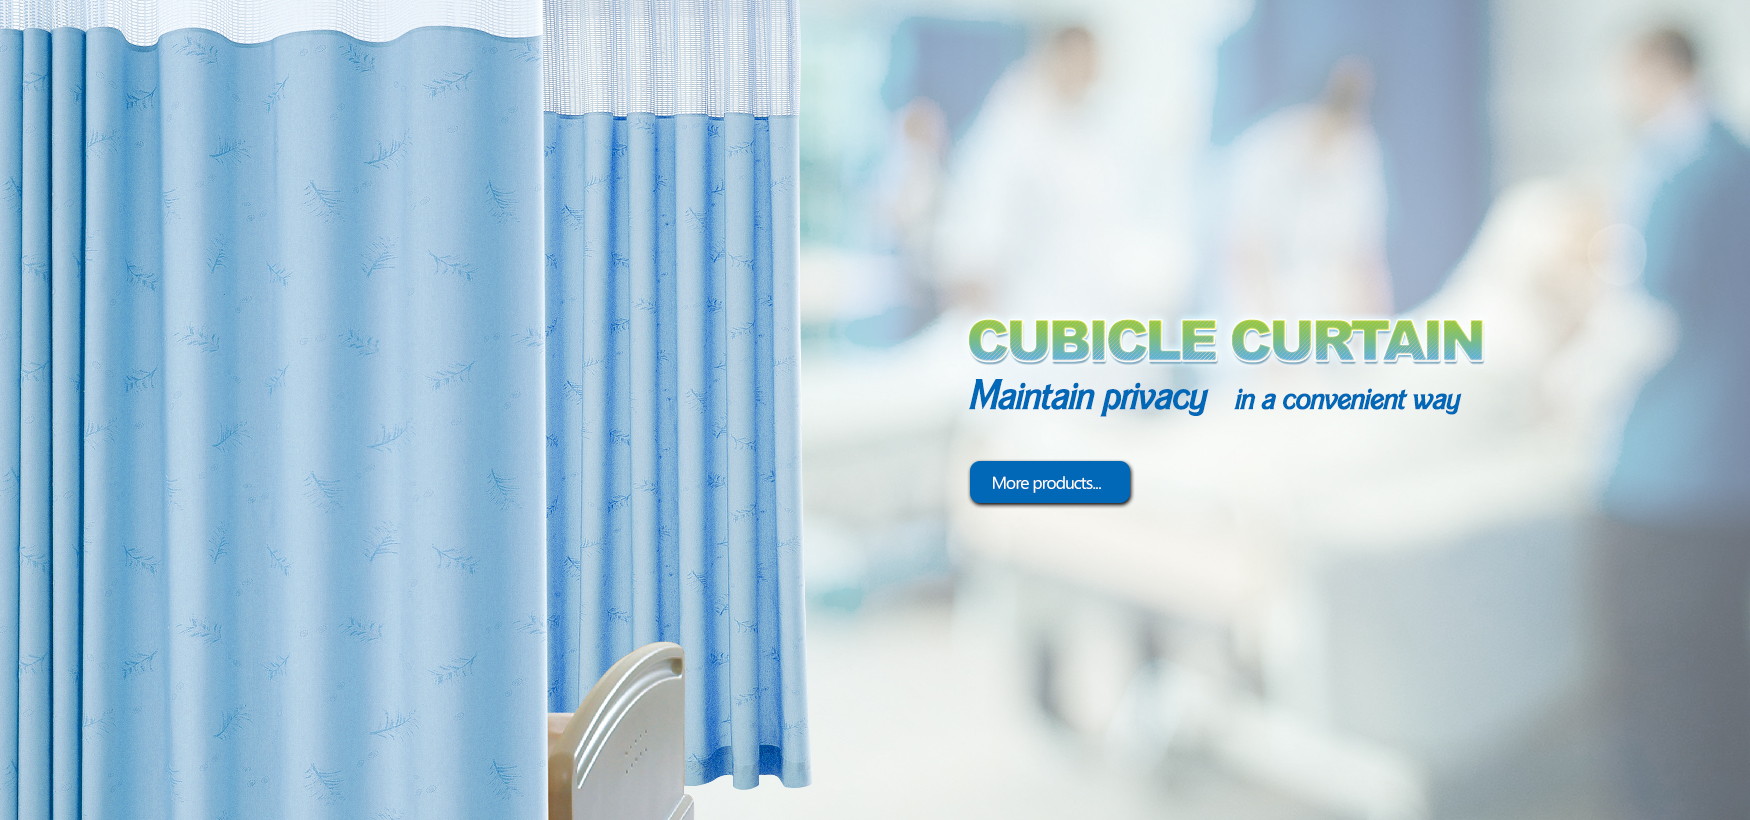 LONGWAY Hospital Cubicle Curtain